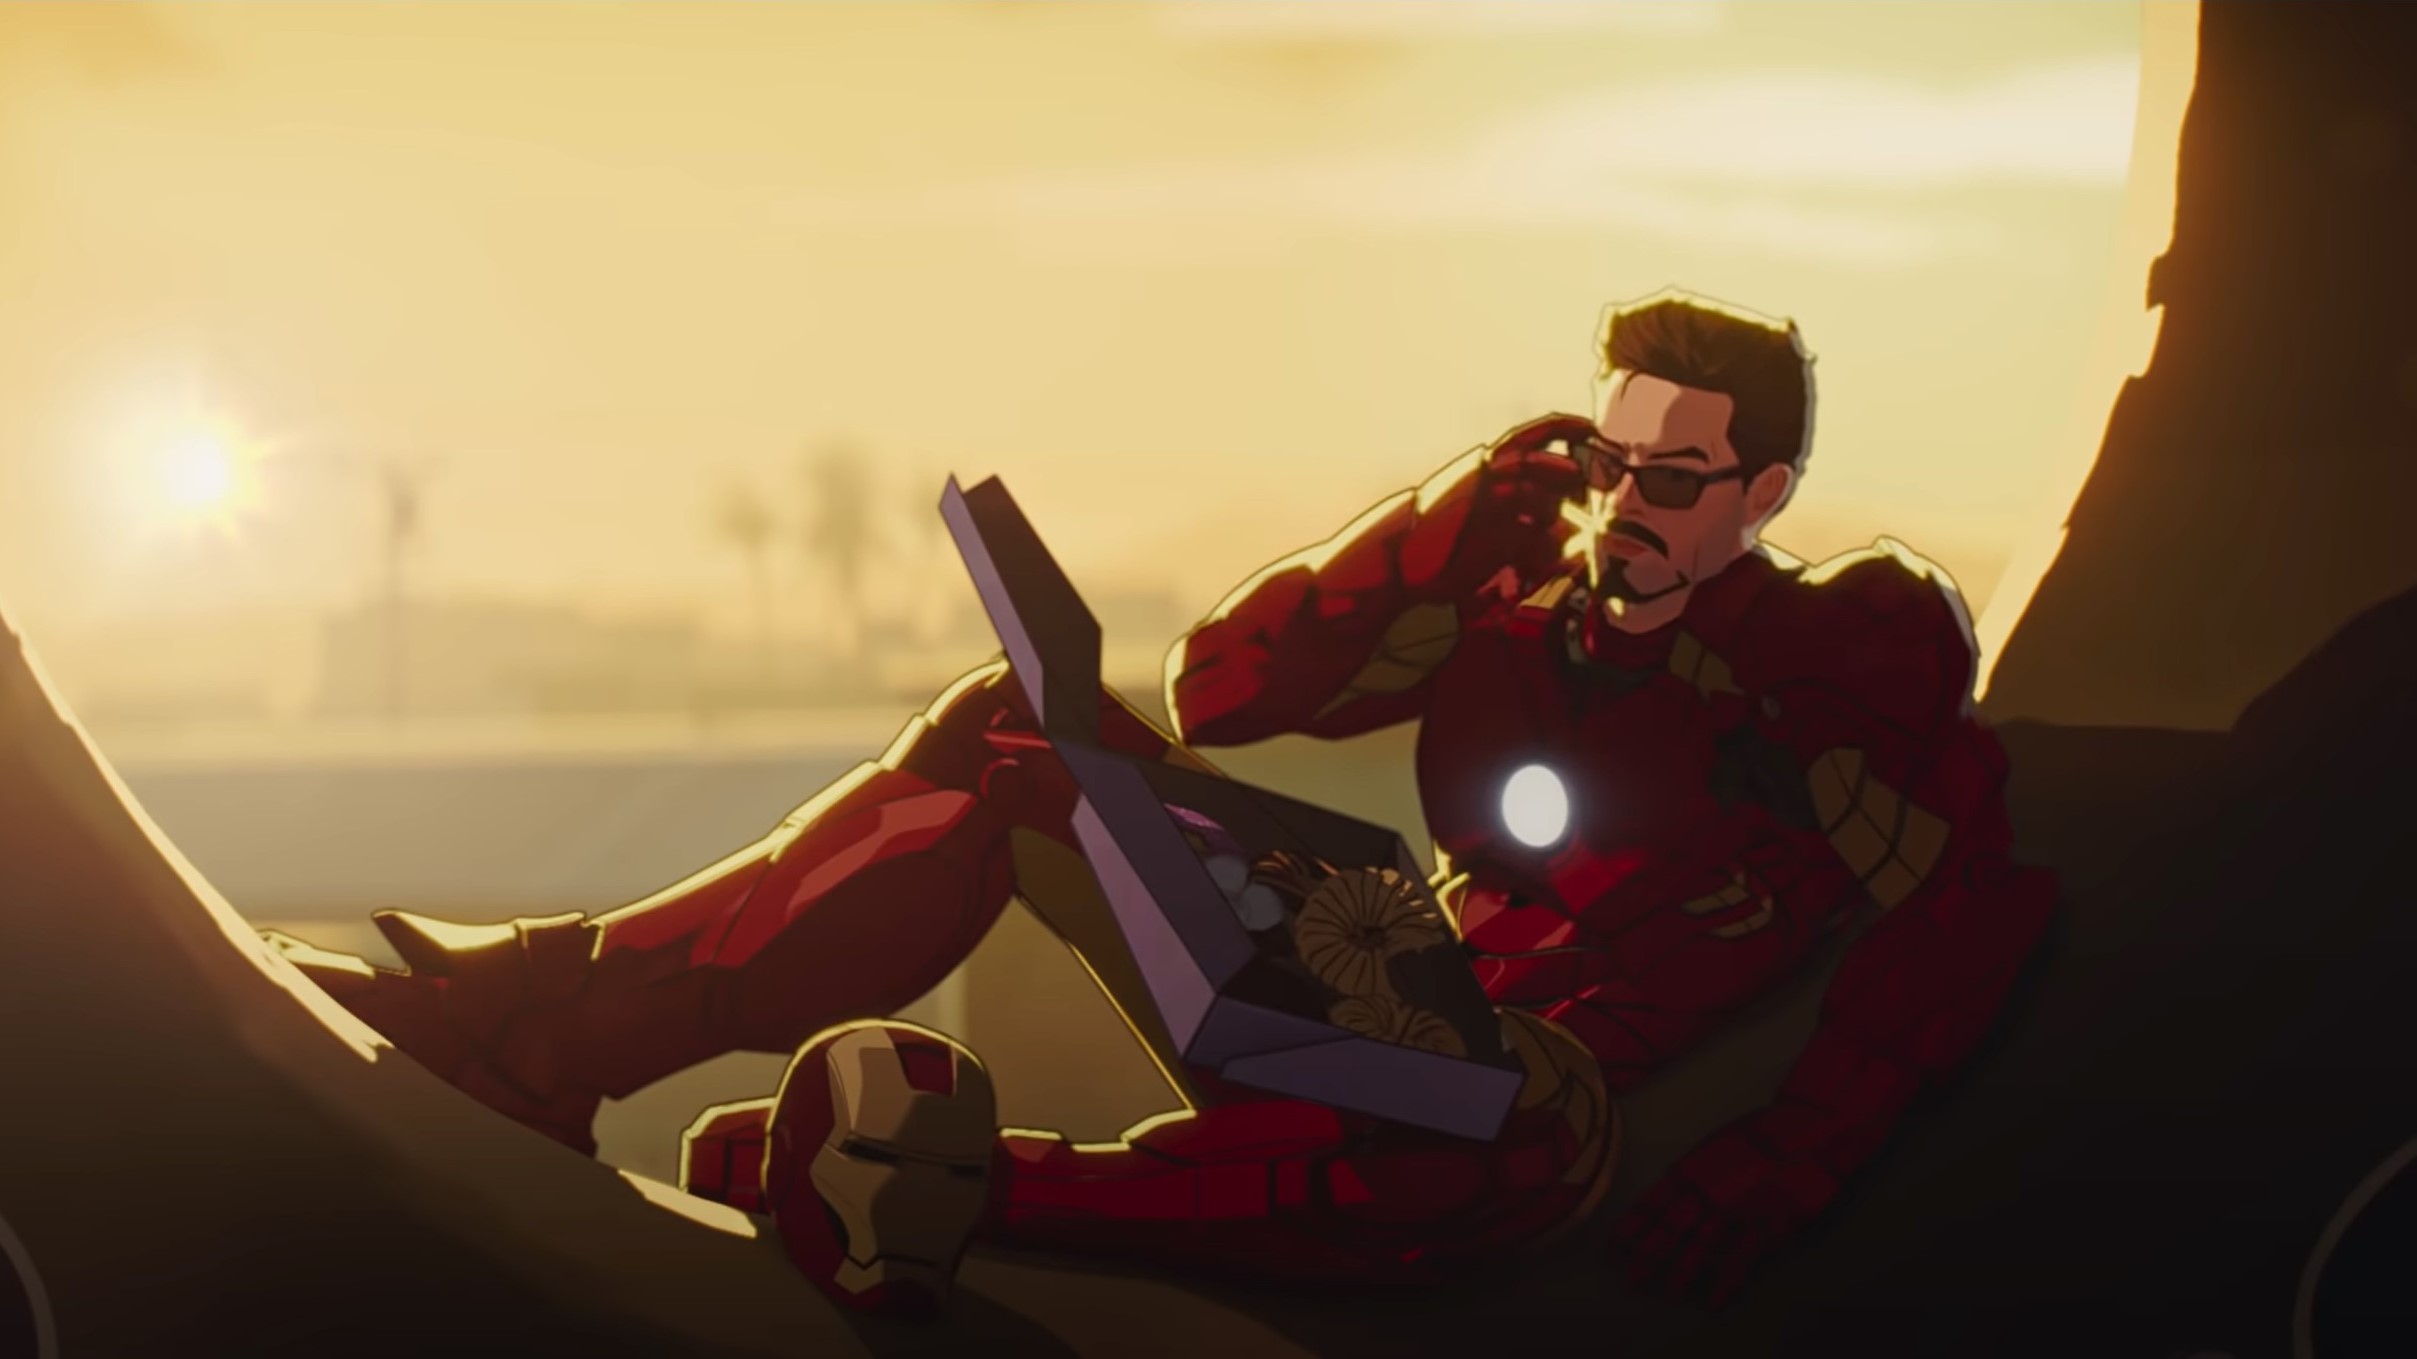 Tony Stark/Iron Man in "What If?"